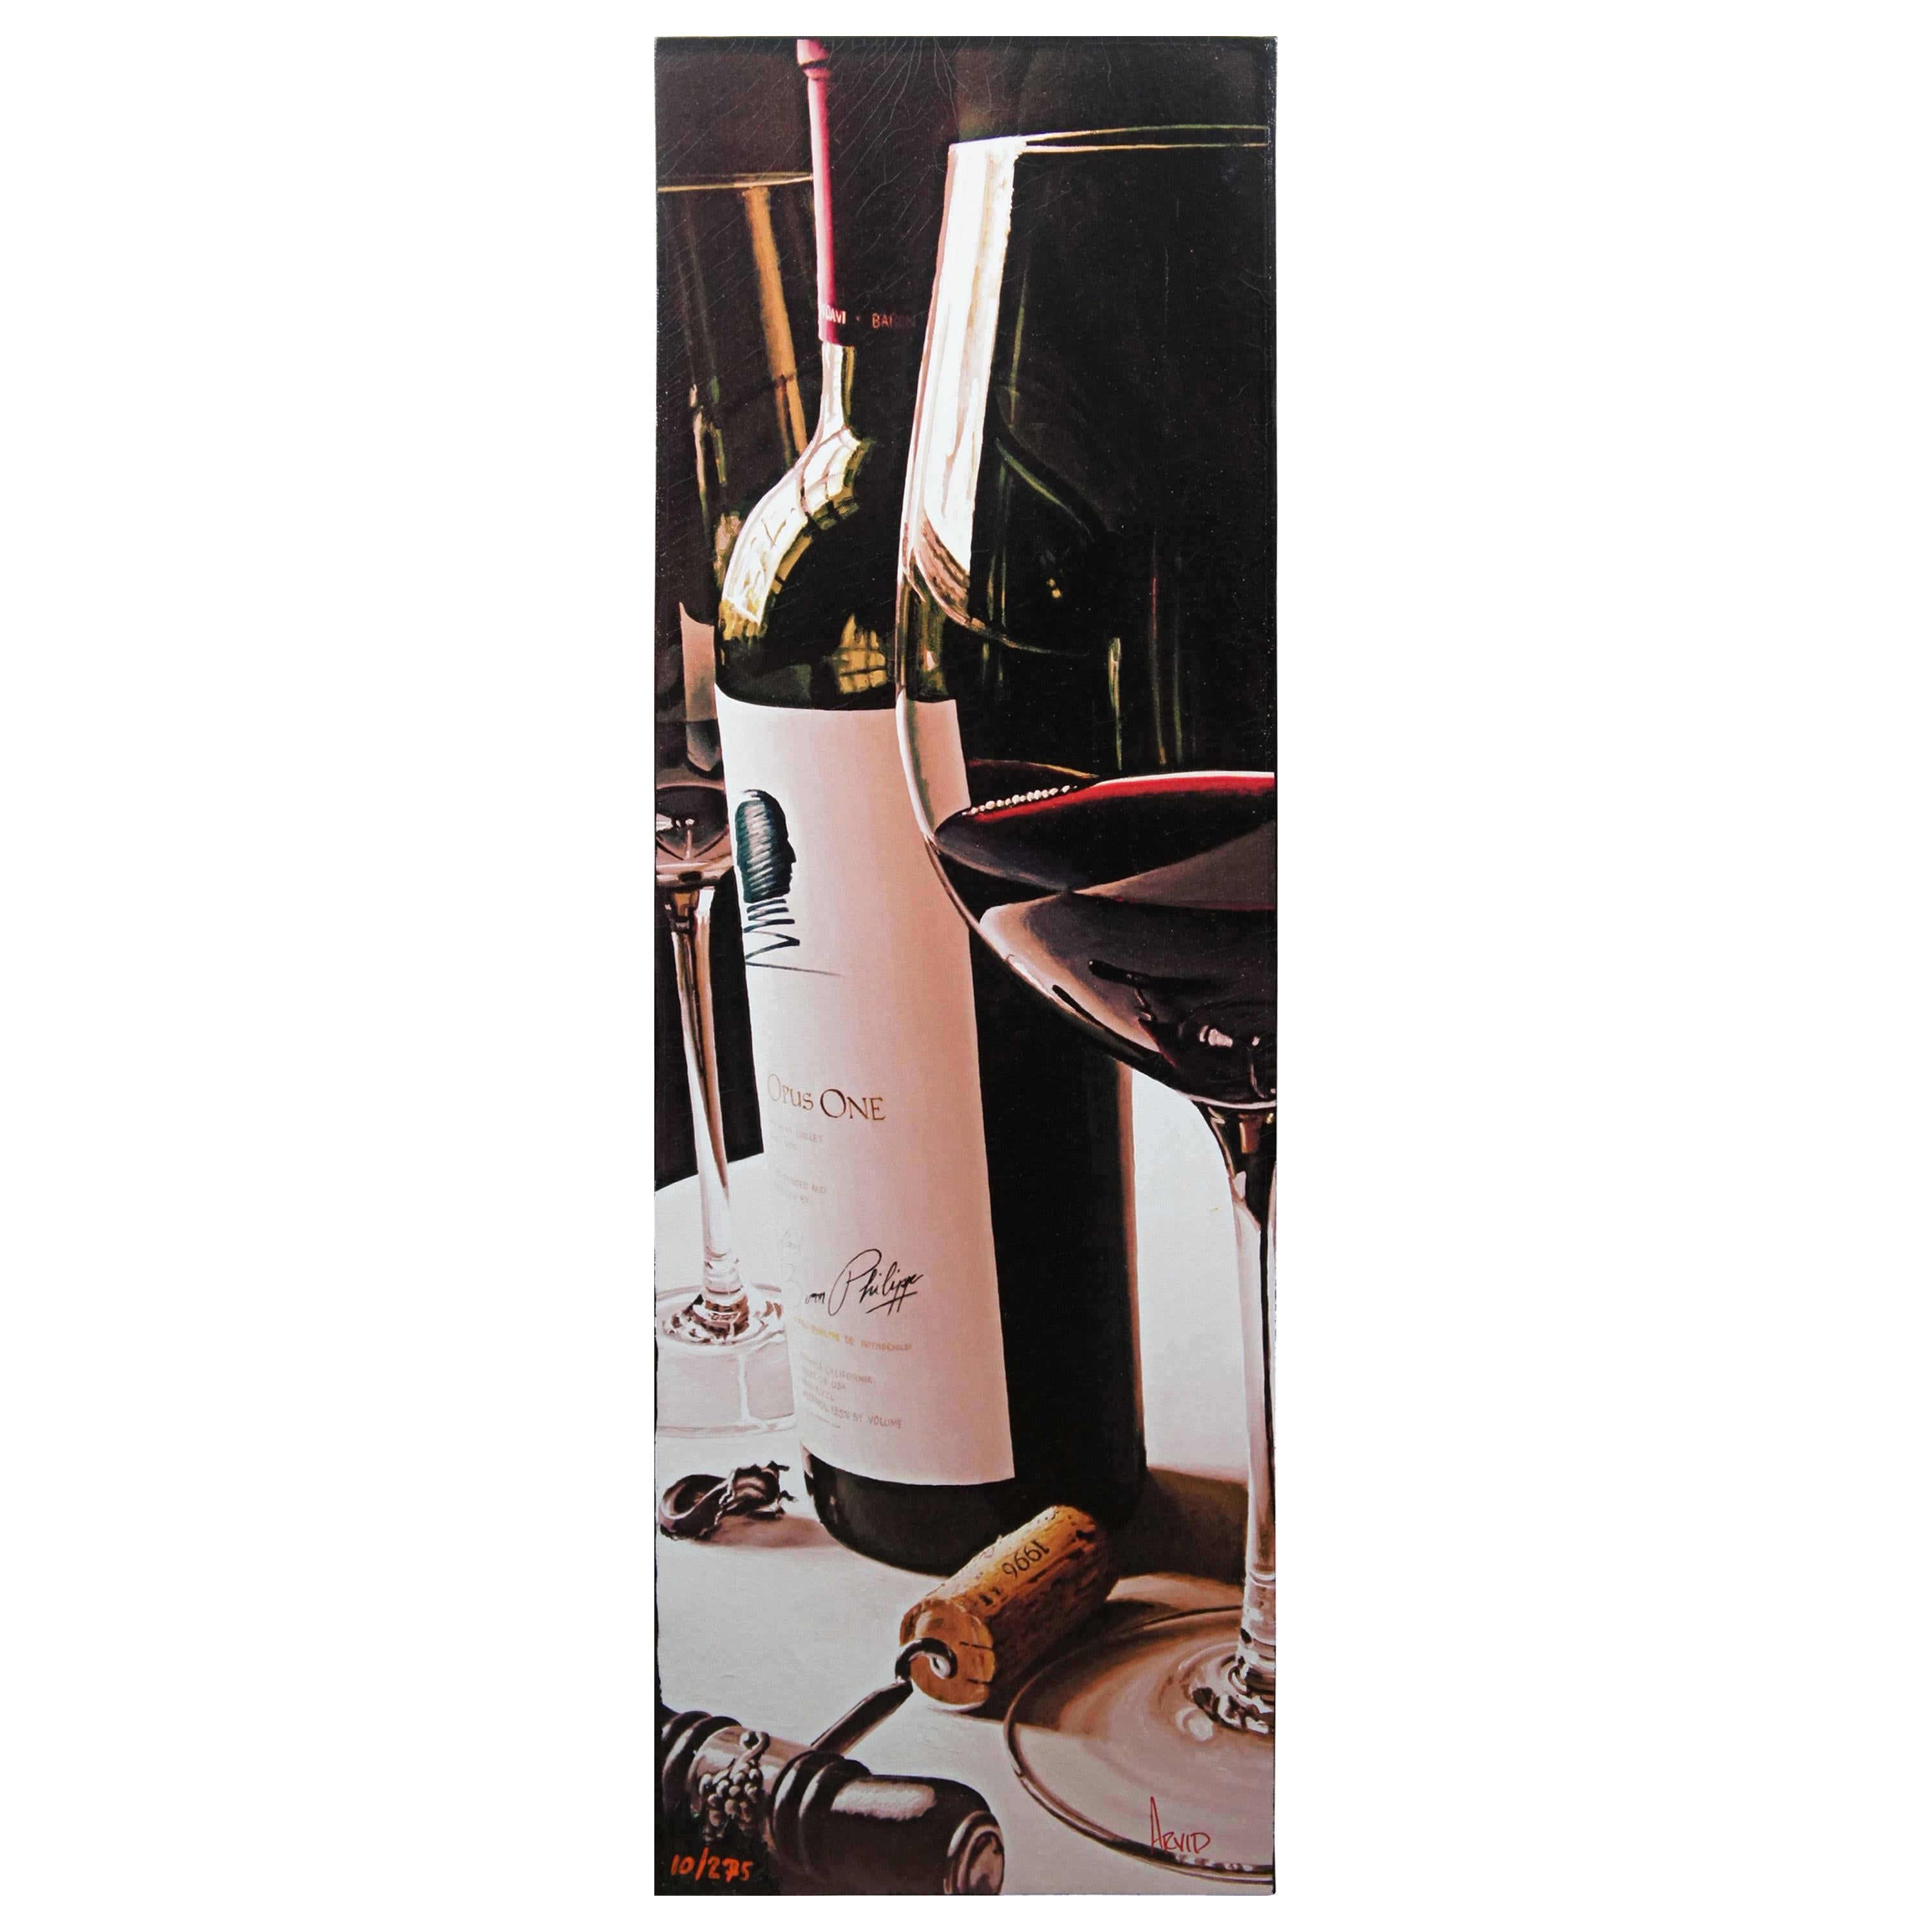 Thomas Arvid America’s Bordeaux Giclee on Canvas Opus One Wine